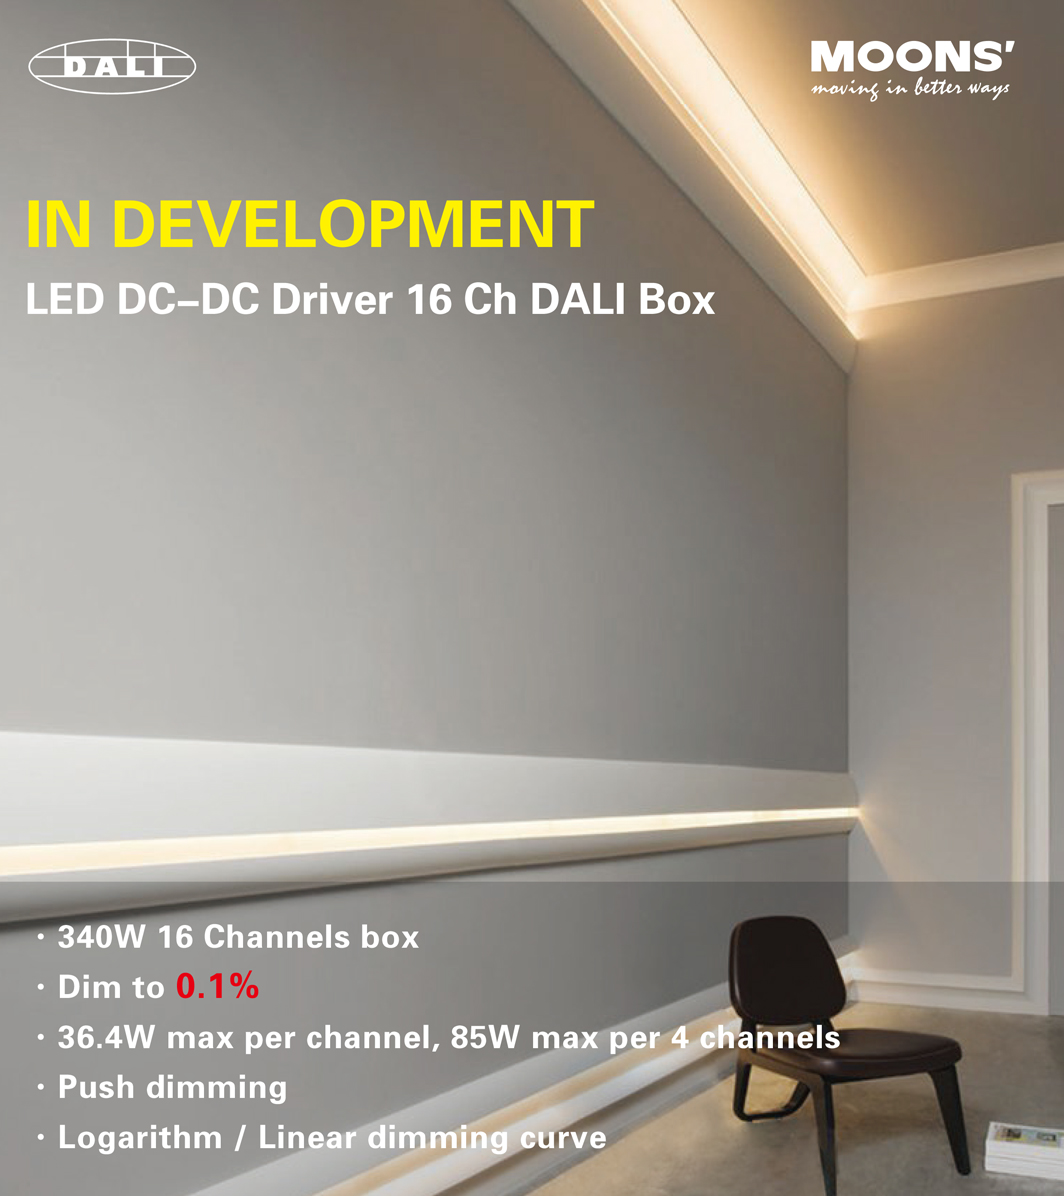 LED DC-DC Driver 16 Ch DALI Box